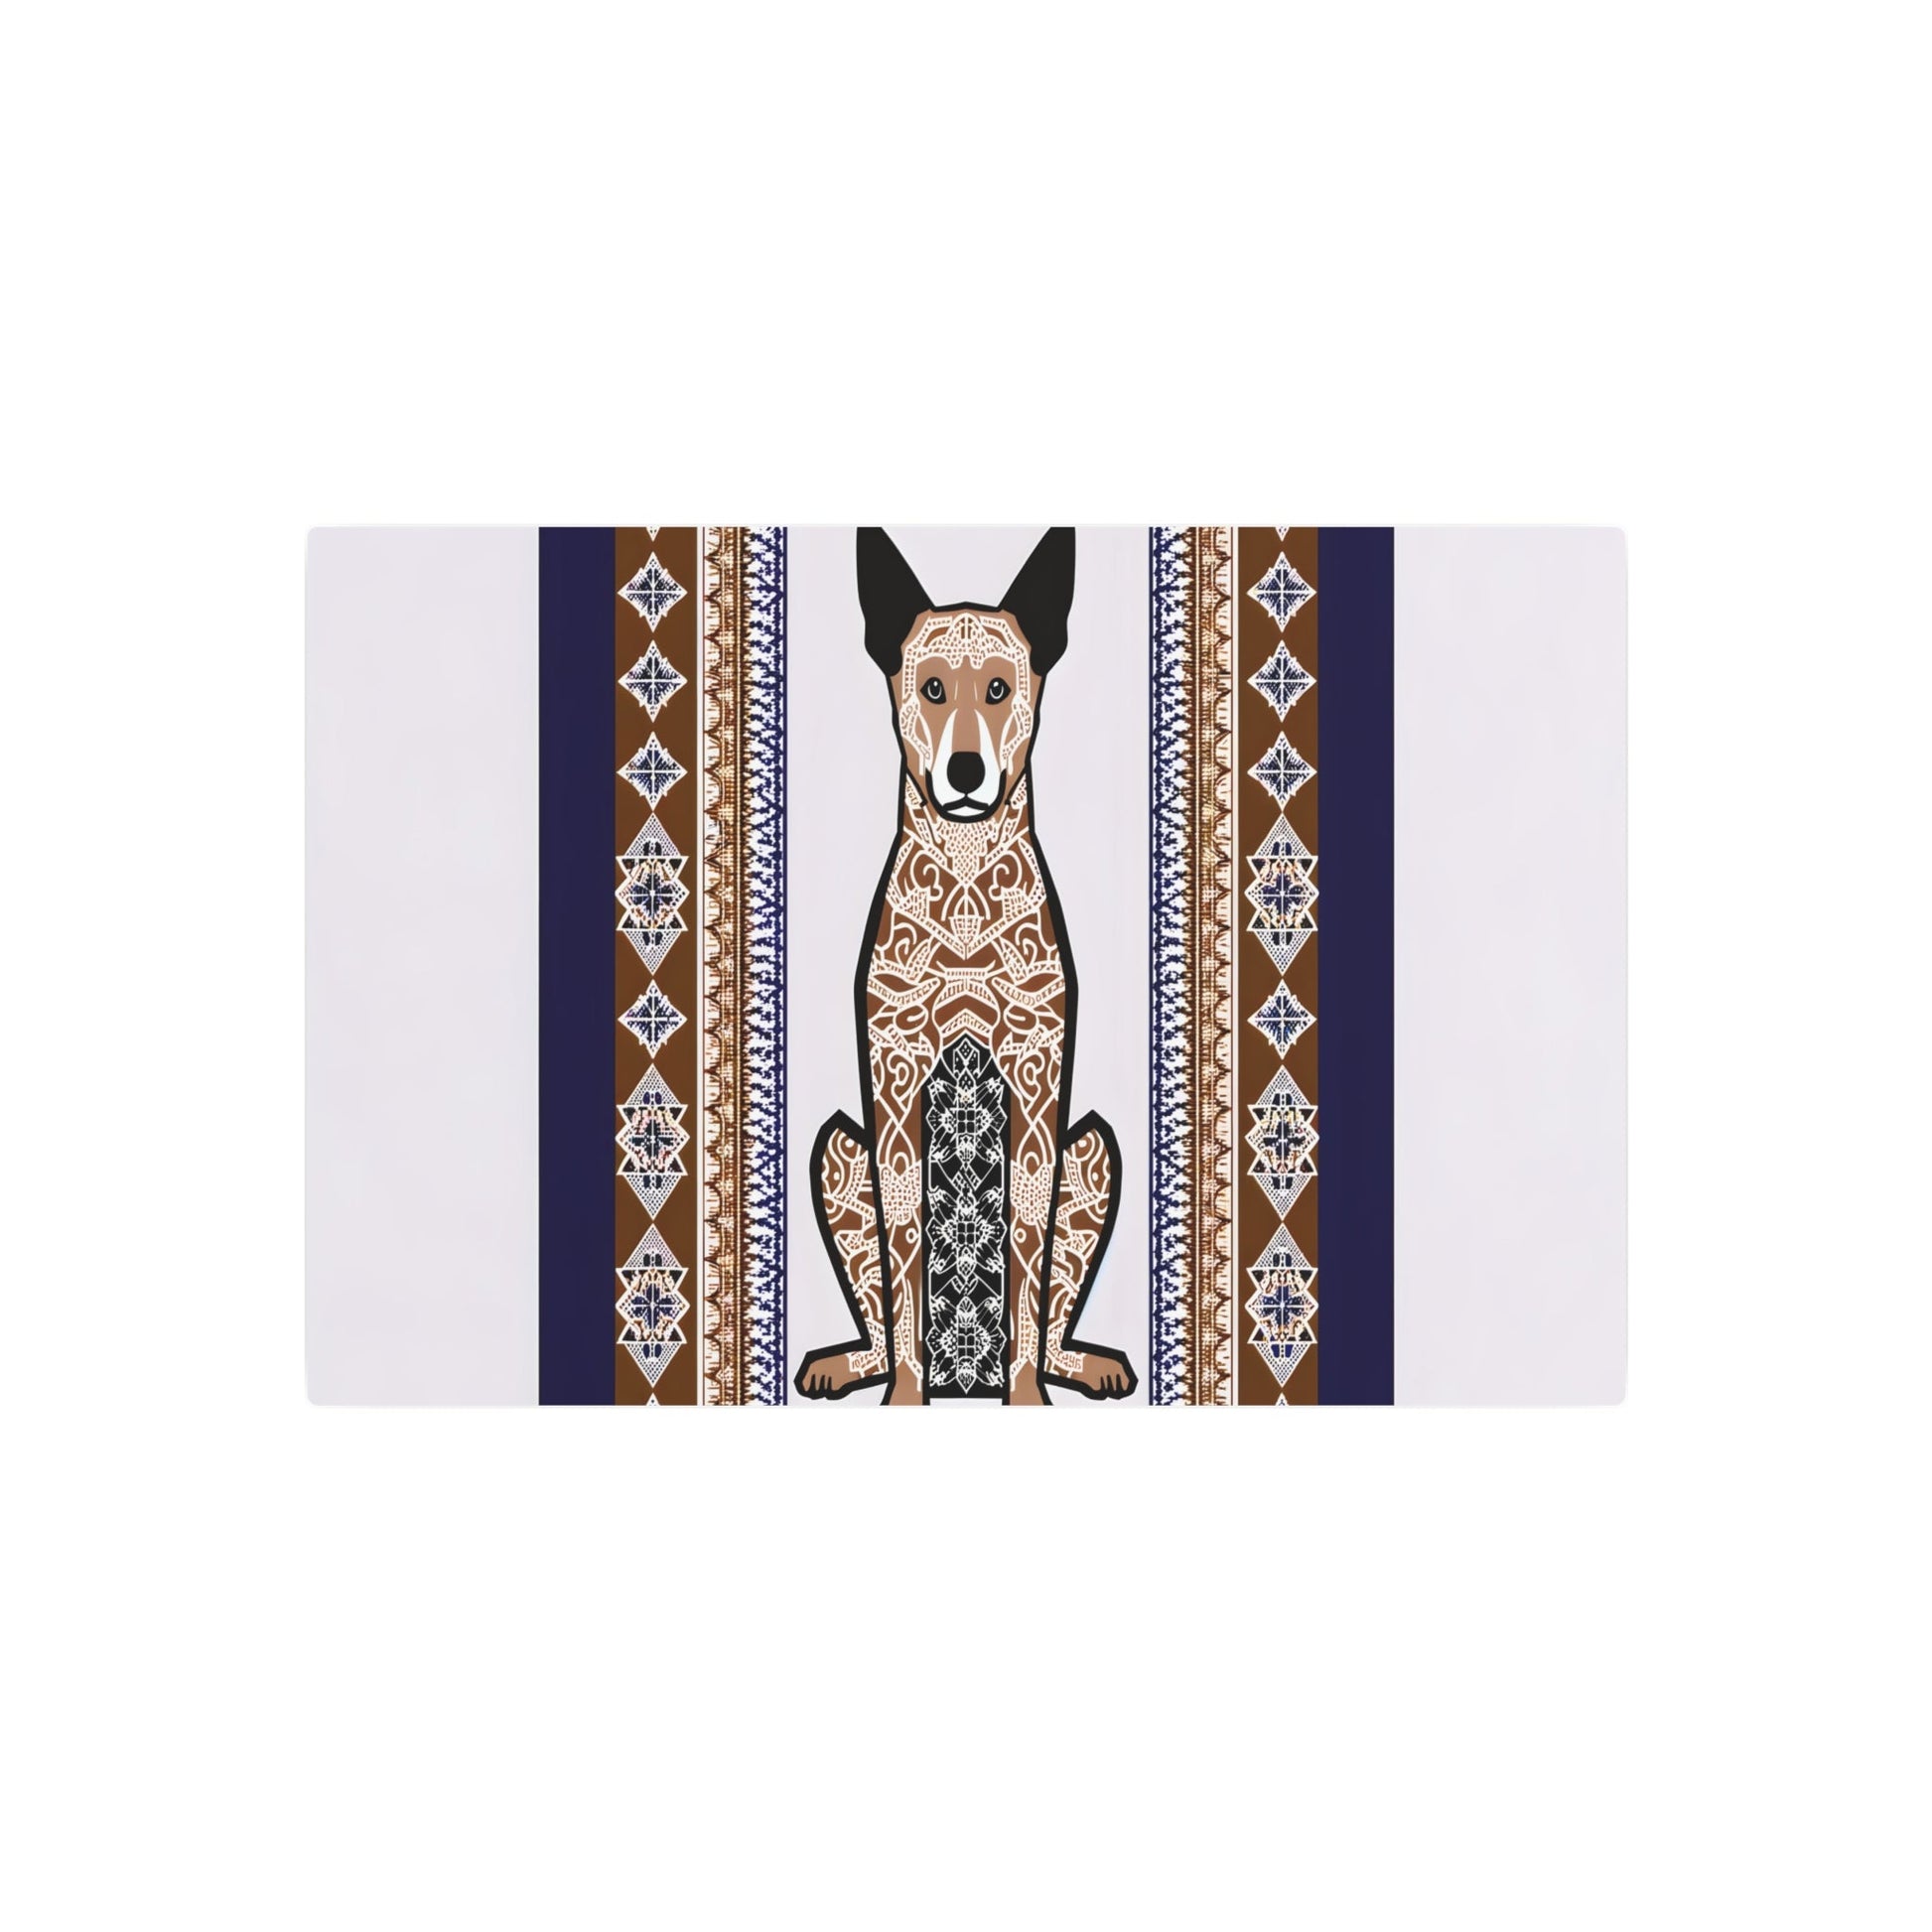 Metal Poster Art | "Batik Artwork - Intricate Indonesian Patterned Dog Design in Traditional Non-Western Style" - Metal Poster Art 30″ x 20″ (Horizontal) 0.12''